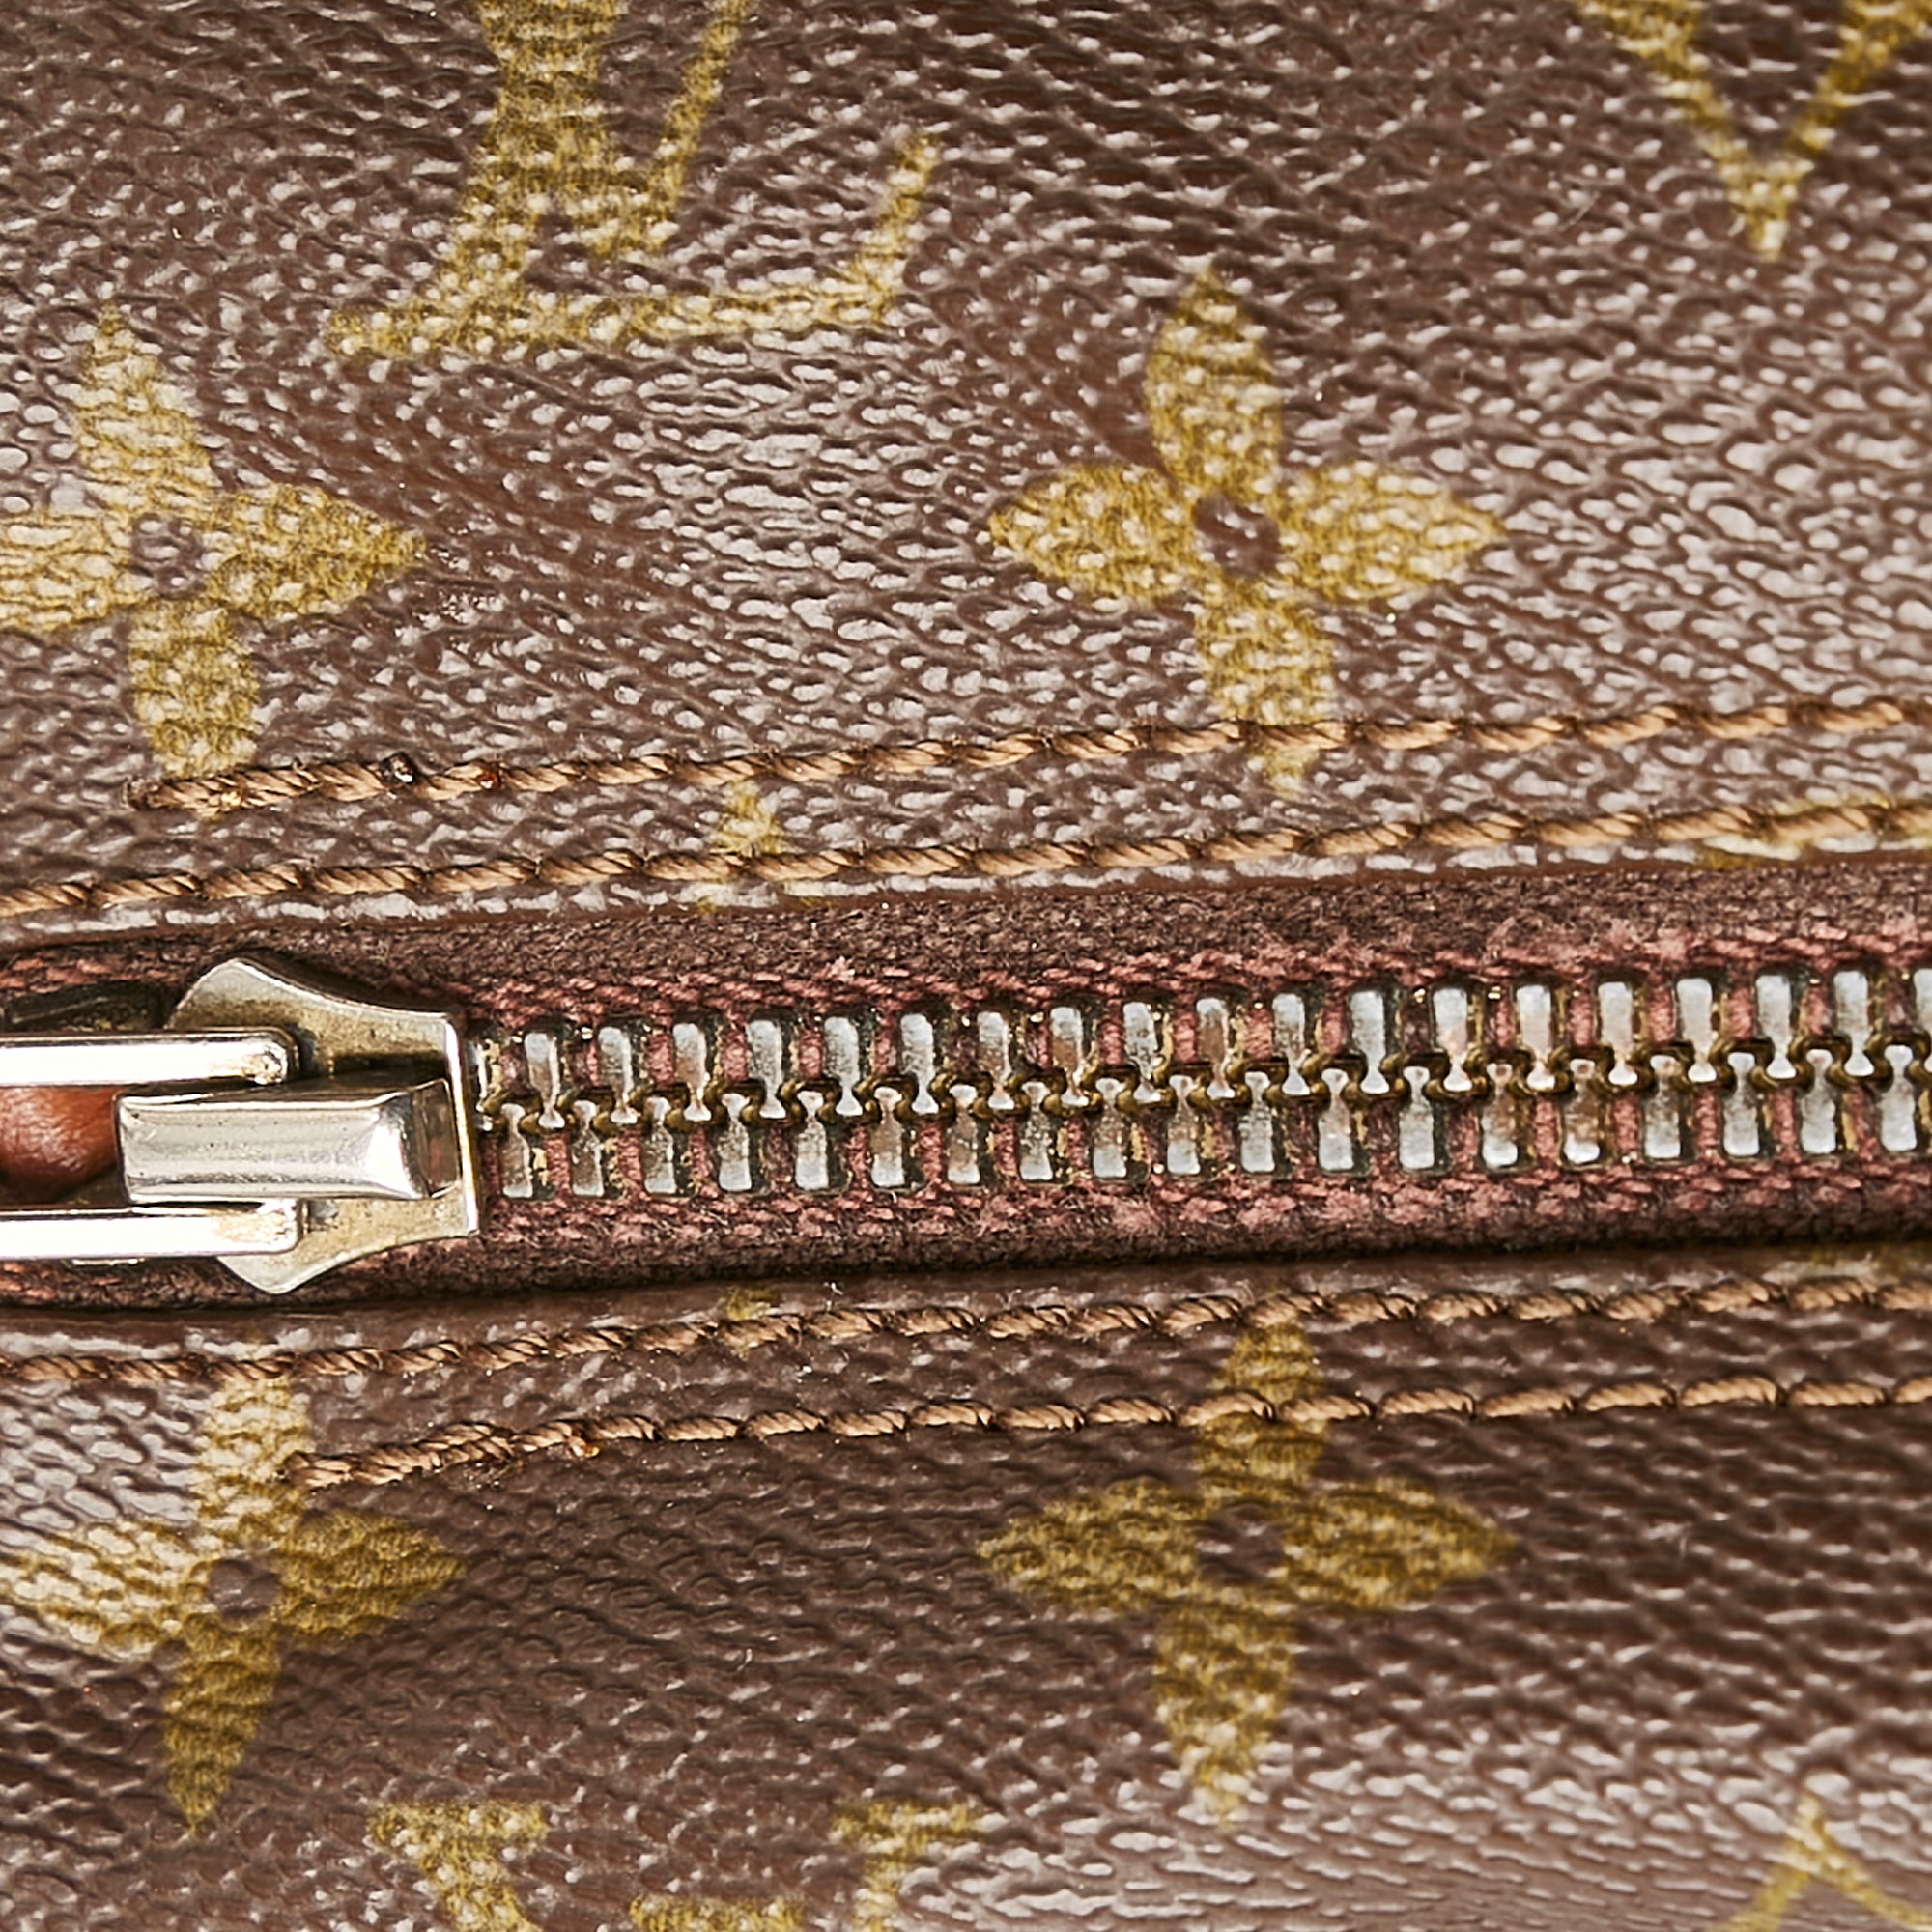 RvceShops Revival, Brown Louis Vuitton Monogram Papillon 30 Handbag